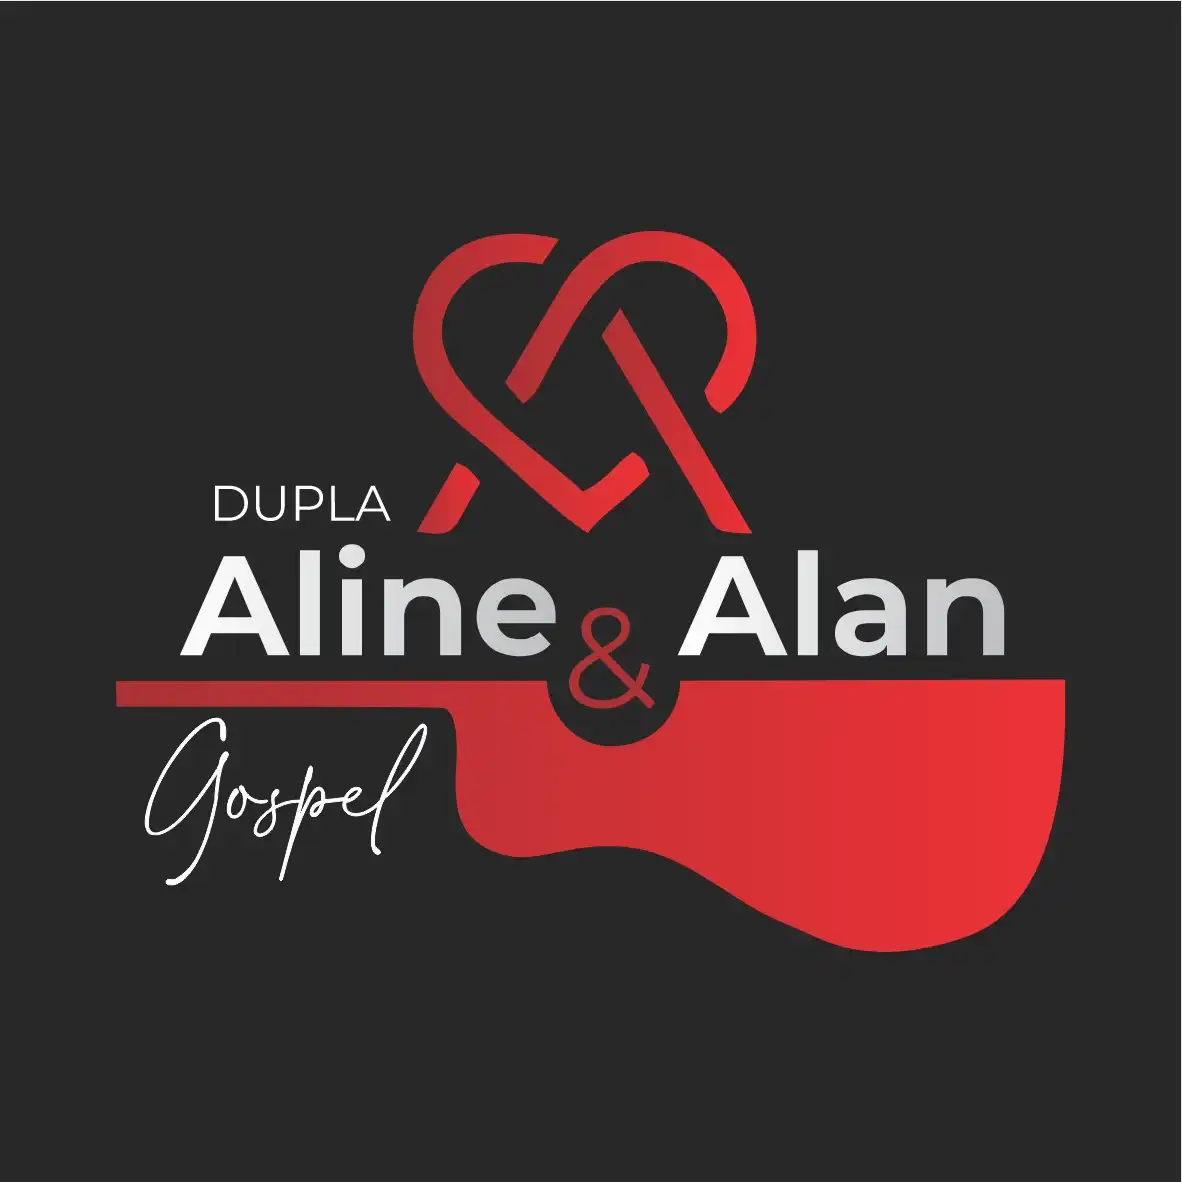 
Logotipo Logomarca Dupla Aline e Alan Música Gospel Acústico



